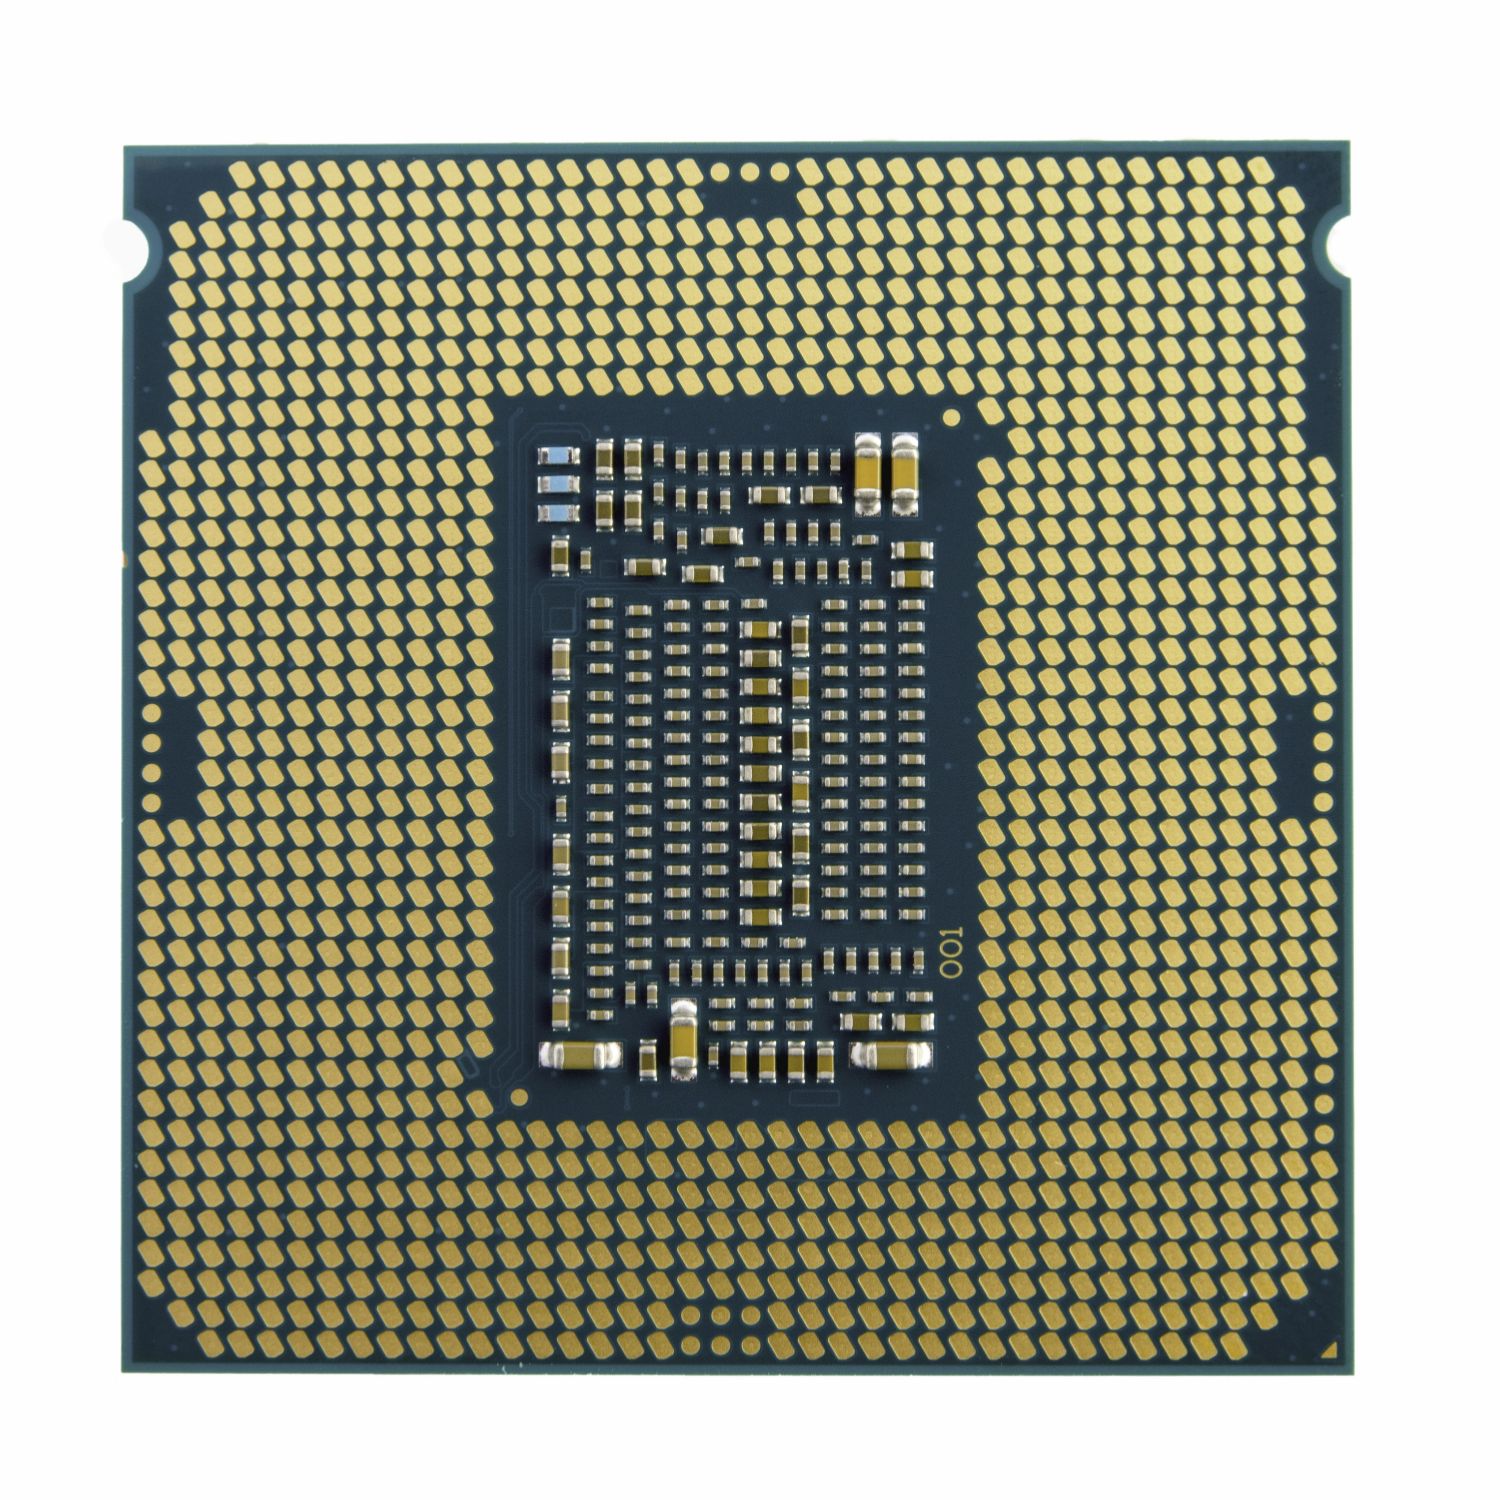 BX8069510920X - Intel Core i9-10920X LGA2066 3.5GHz 19.25Mb PCIe 3.0 256Gb DDR4 64 Bits Caja Sin Ventilador (BX8069510920X)